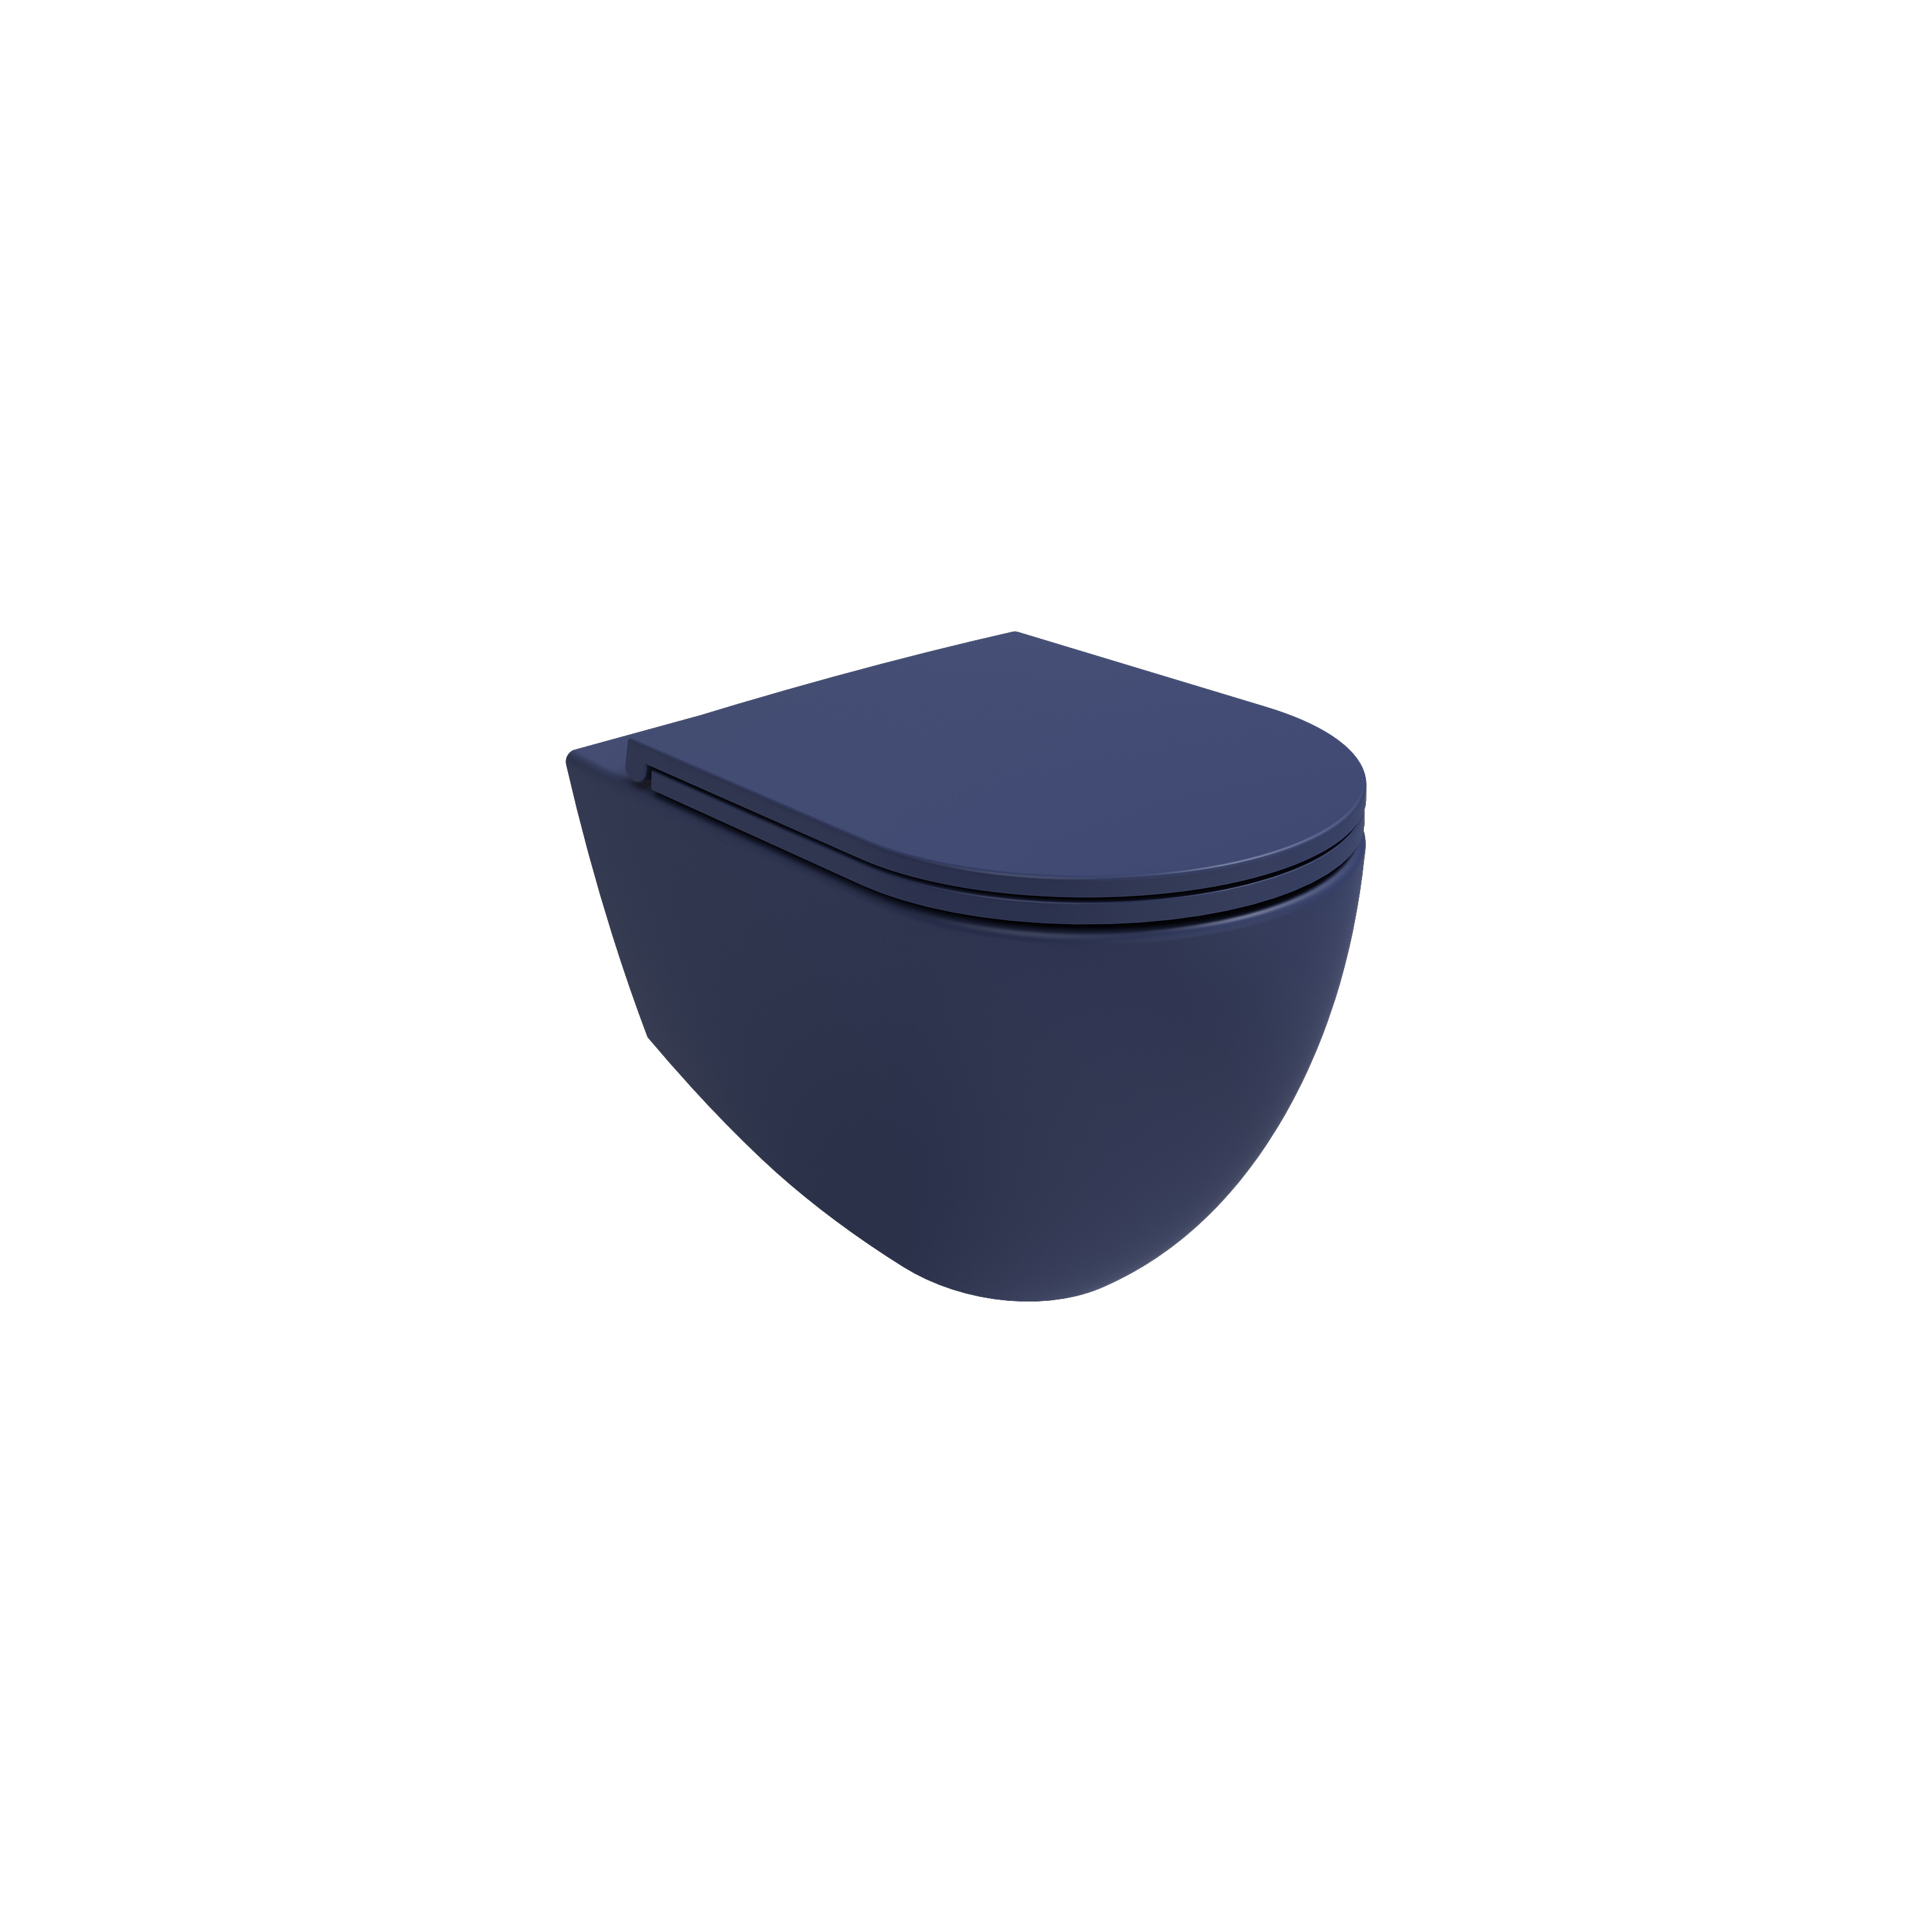 Infinity Countertop Washbasin 50 cm Isvea Blue